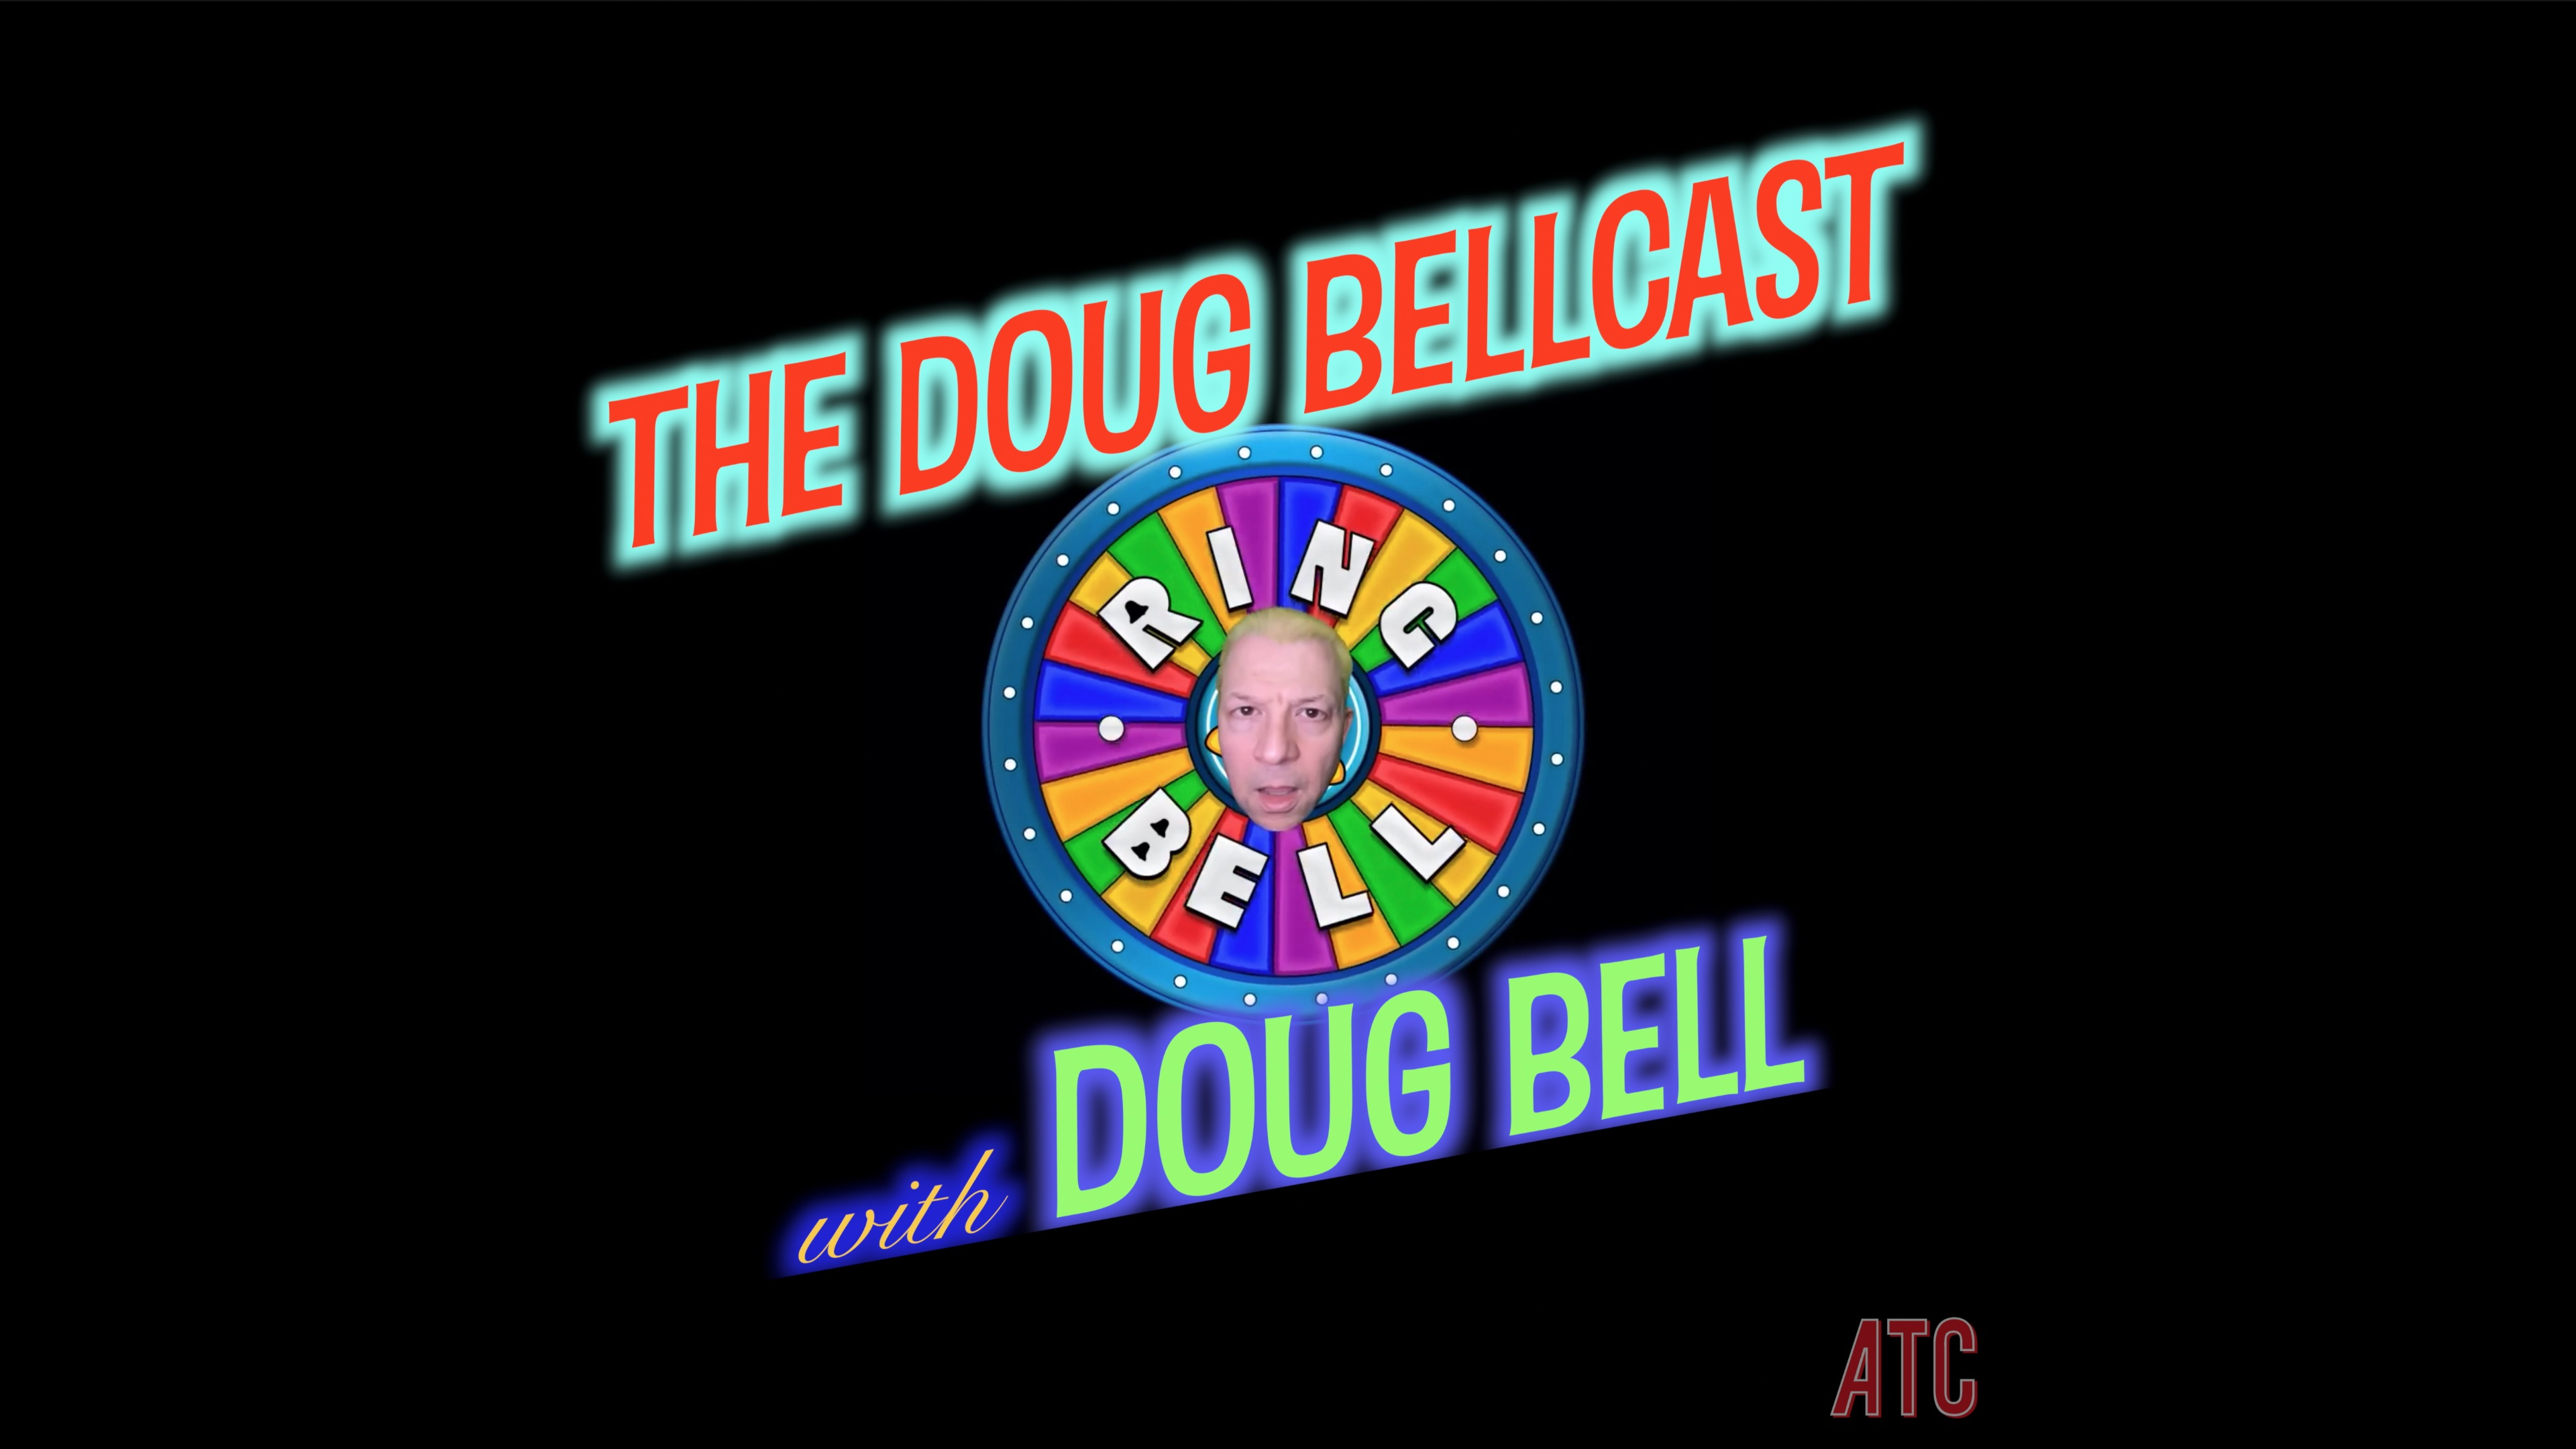 Doug Bellcast 47 - Neil deGrasse Tyson, Dr. Michio Kaku, Buzz Aldrin